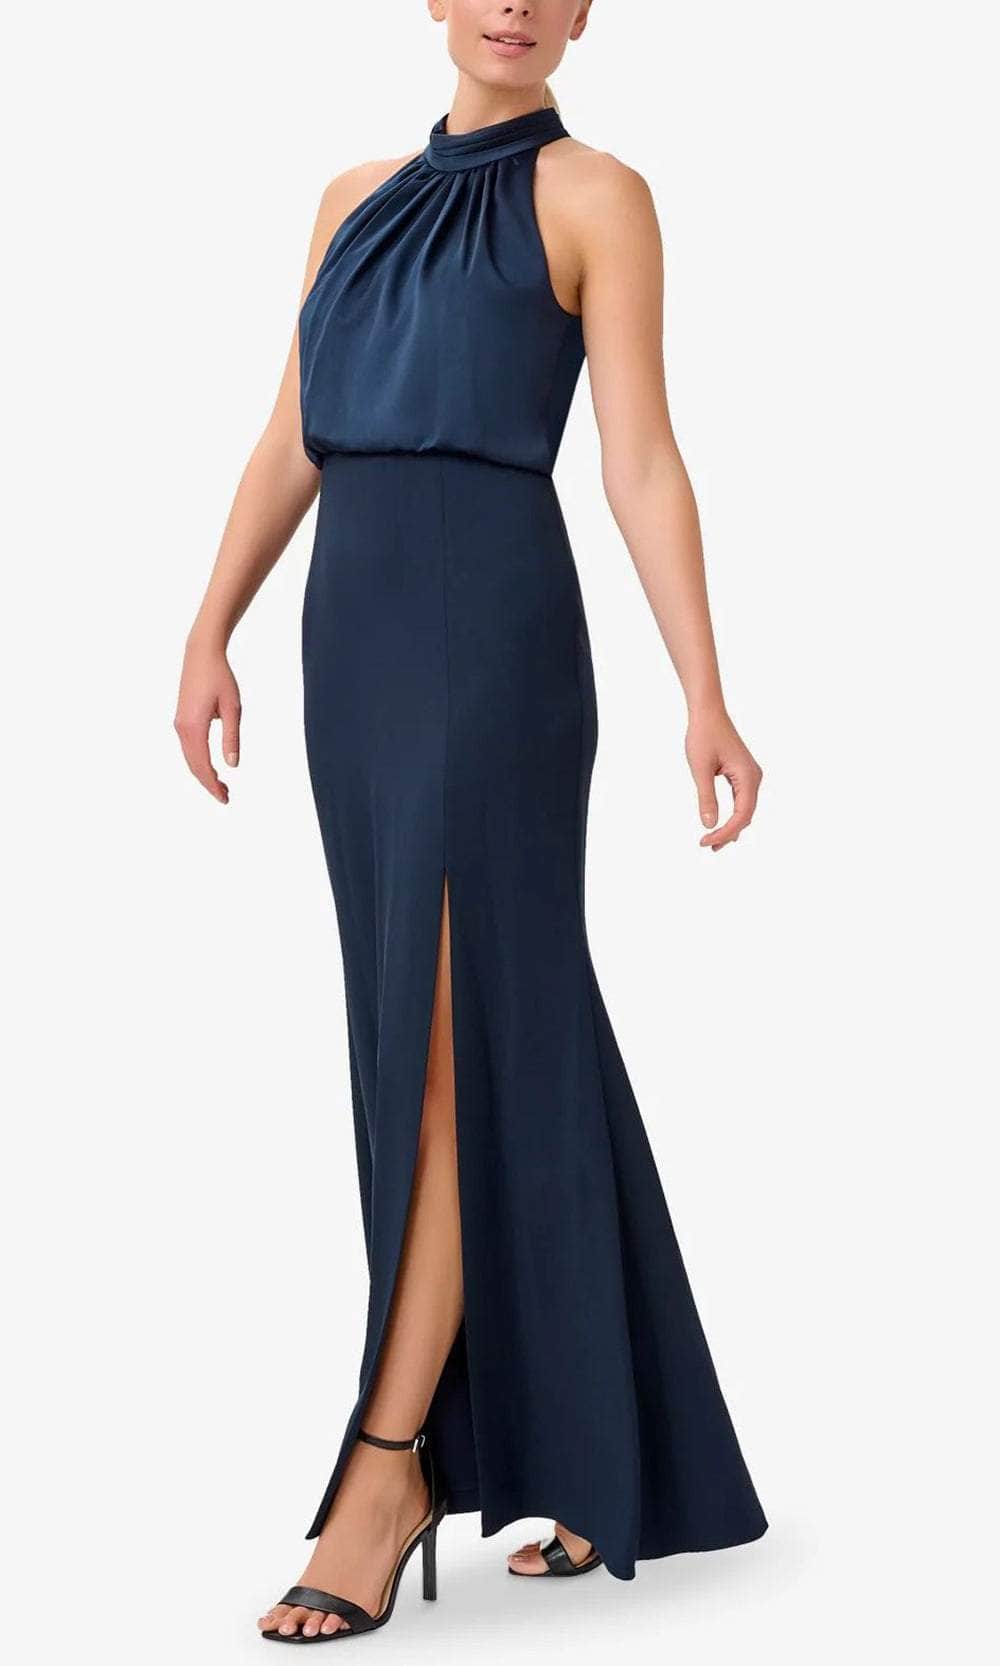 Liesl + Co - Enmore Halter Top + Dress - Size 0-20 > Liesl & Co